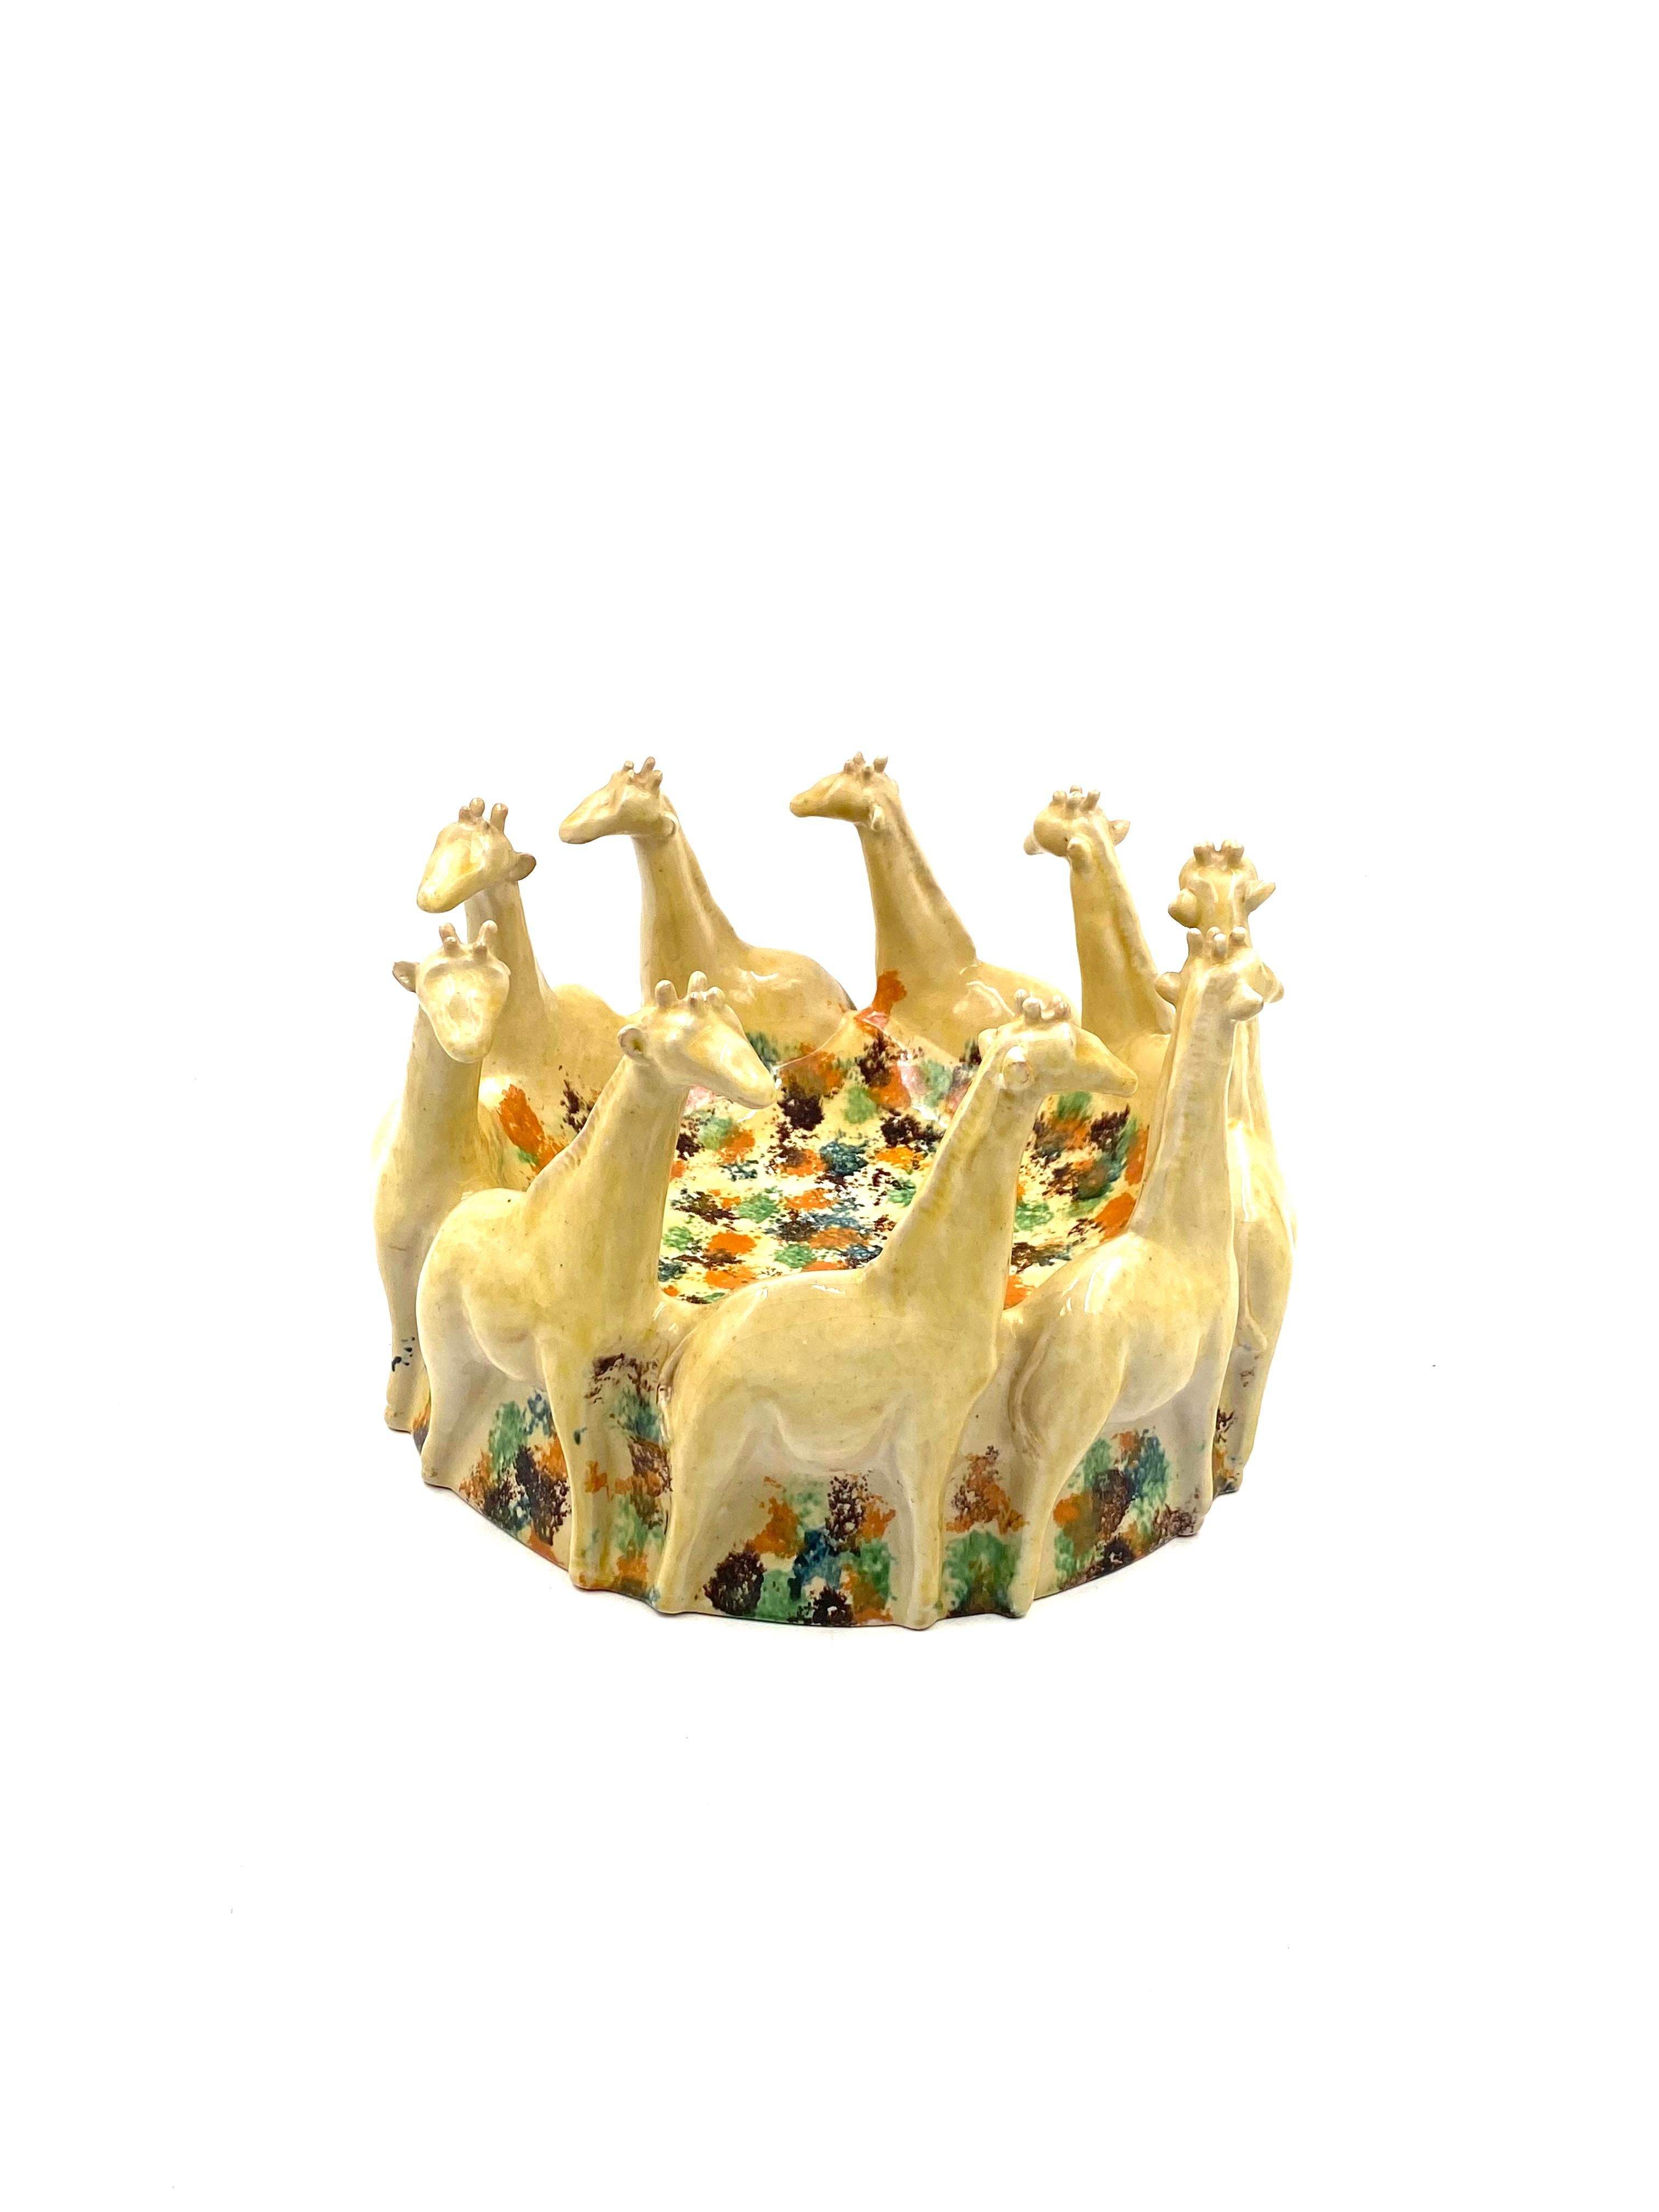 Postmodern giraffe ceramic centerpiece / vide poche, ND Dolfi Italy, 1990s For Sale 4